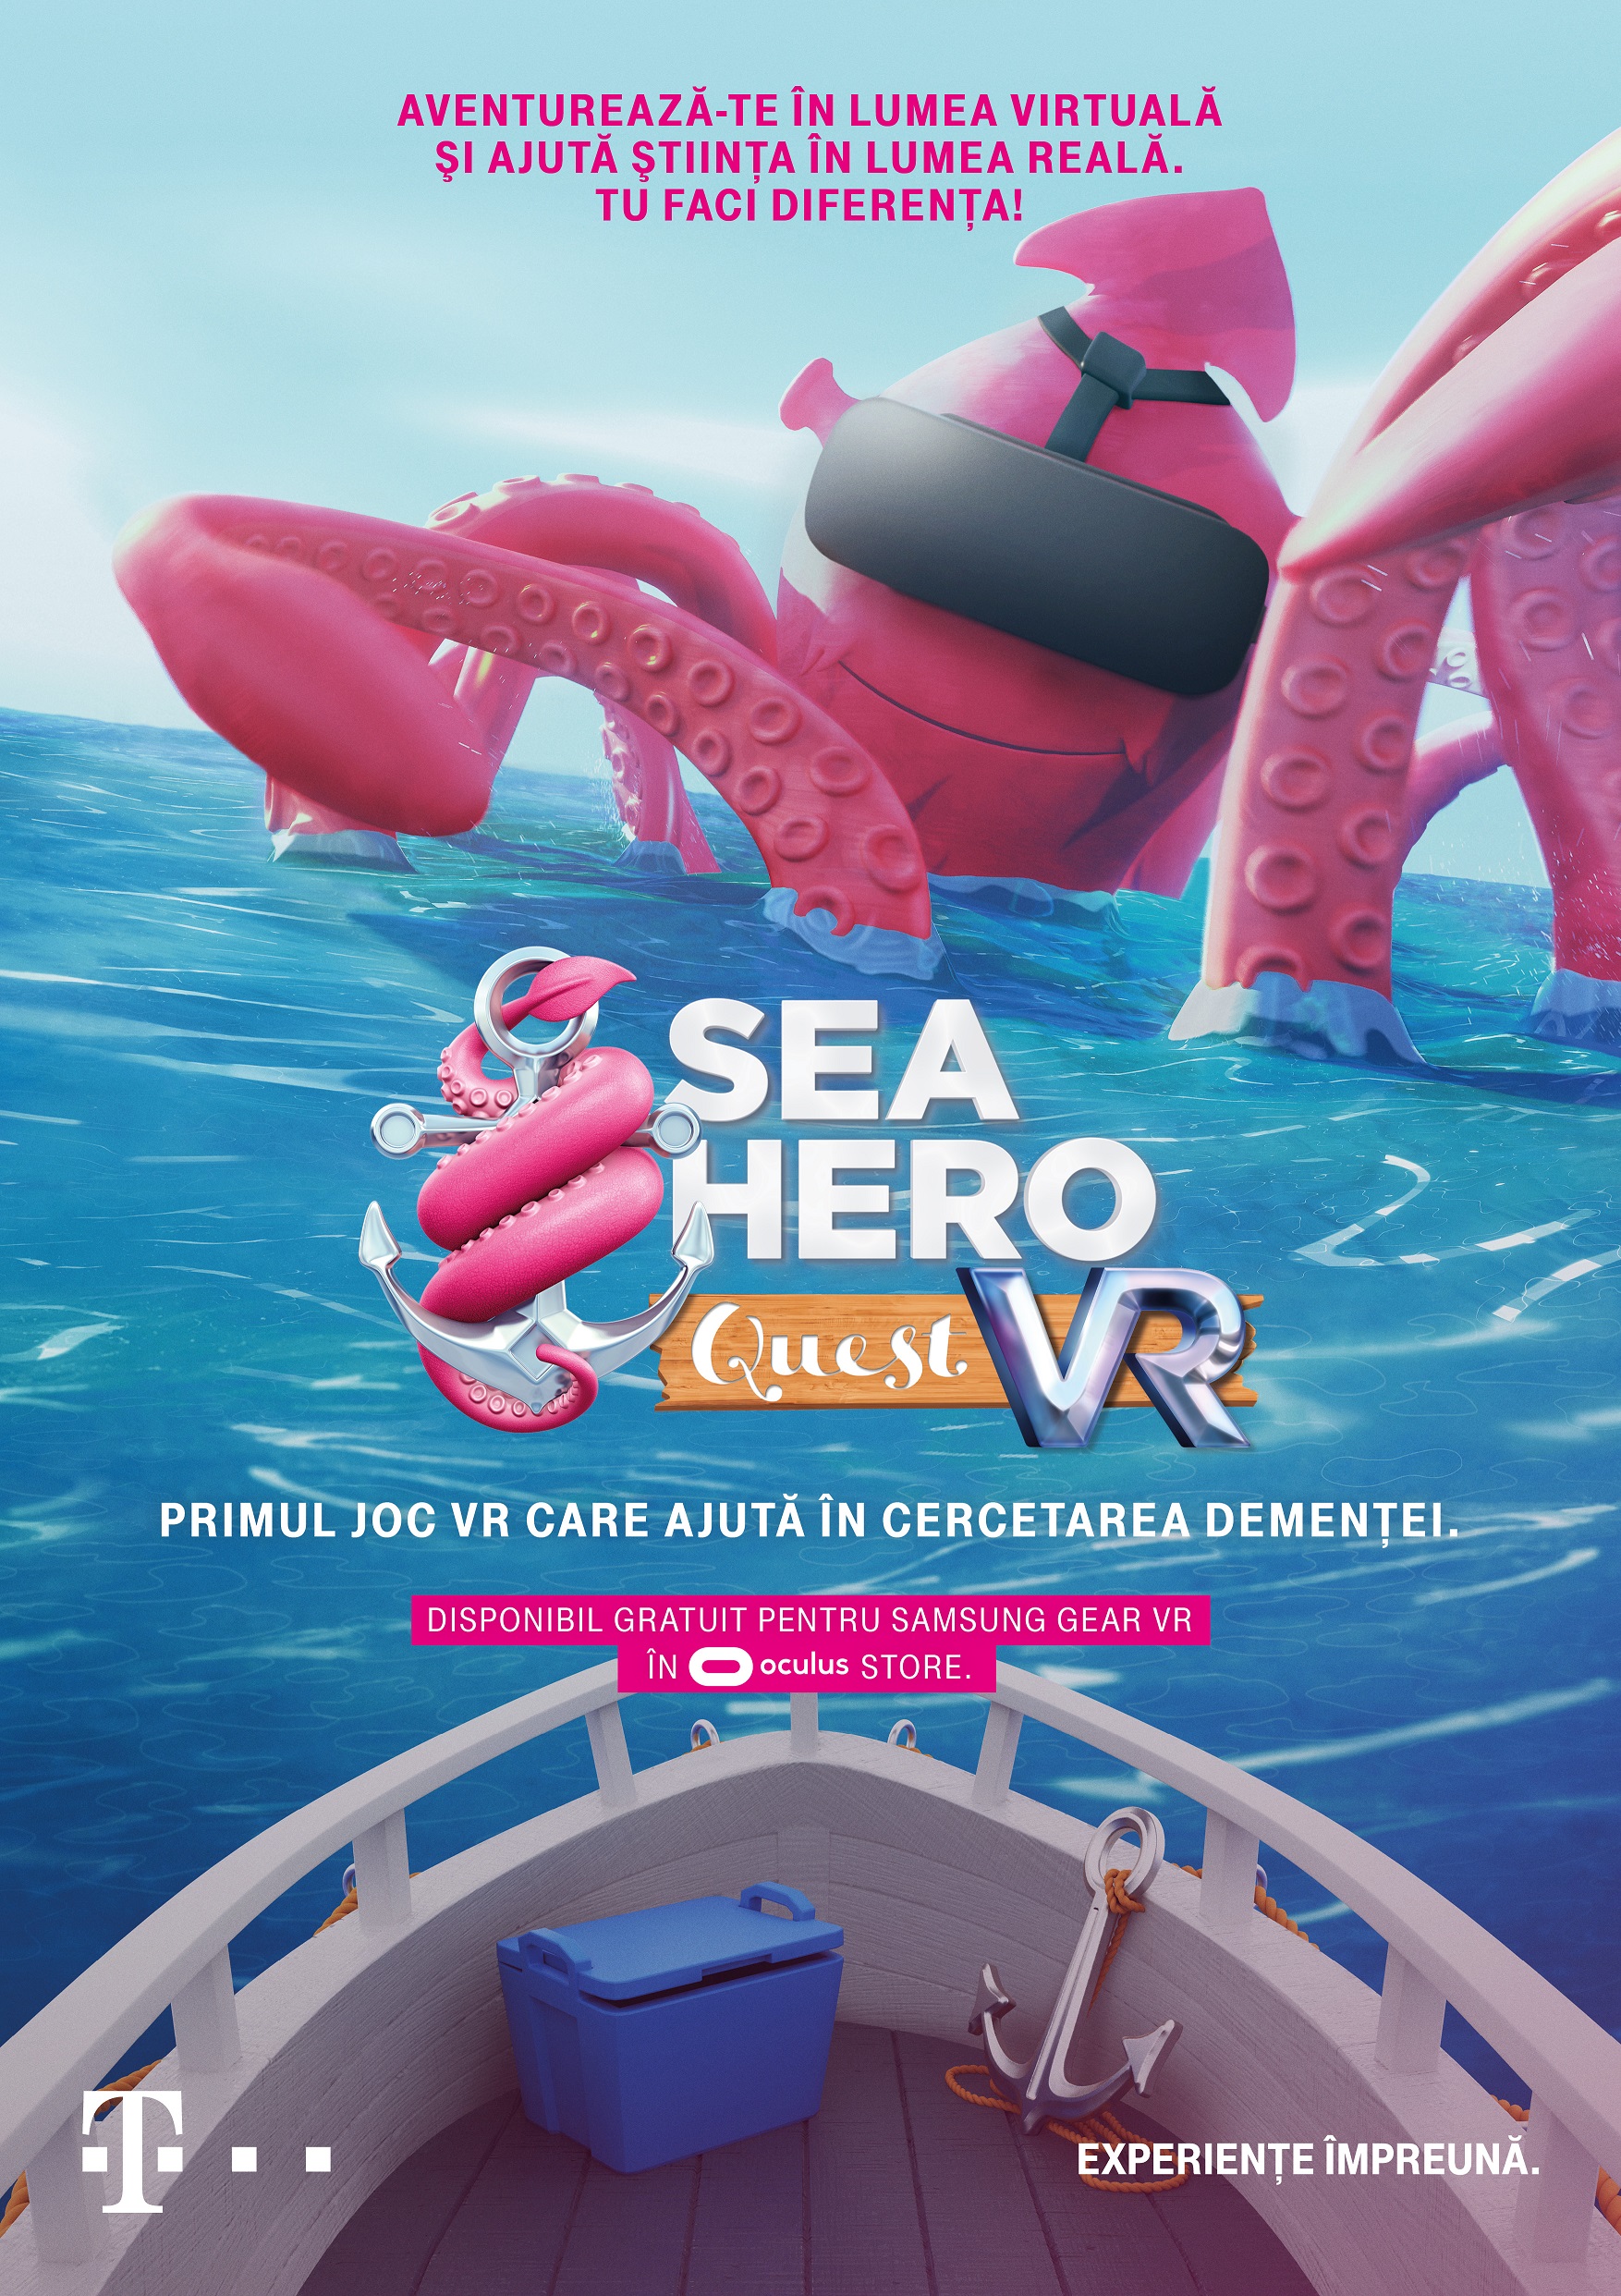 Deutsche Telekom lanseaza Sea Hero Quest VR, jocul care sustine cercetarea dementei